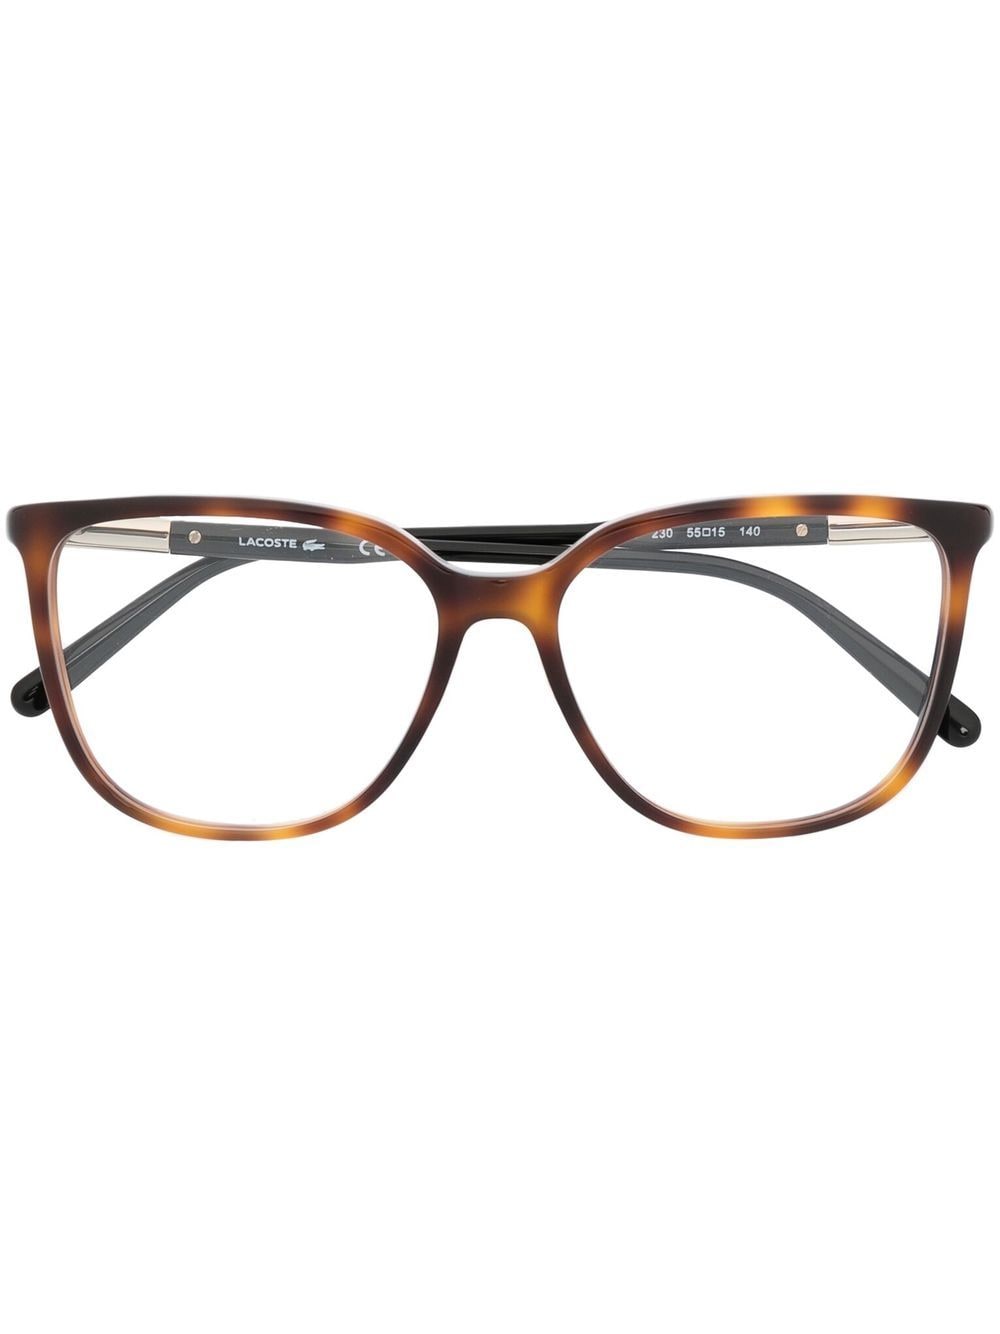 Lacoste tortoiseshell square-frame glasses - Brown von Lacoste